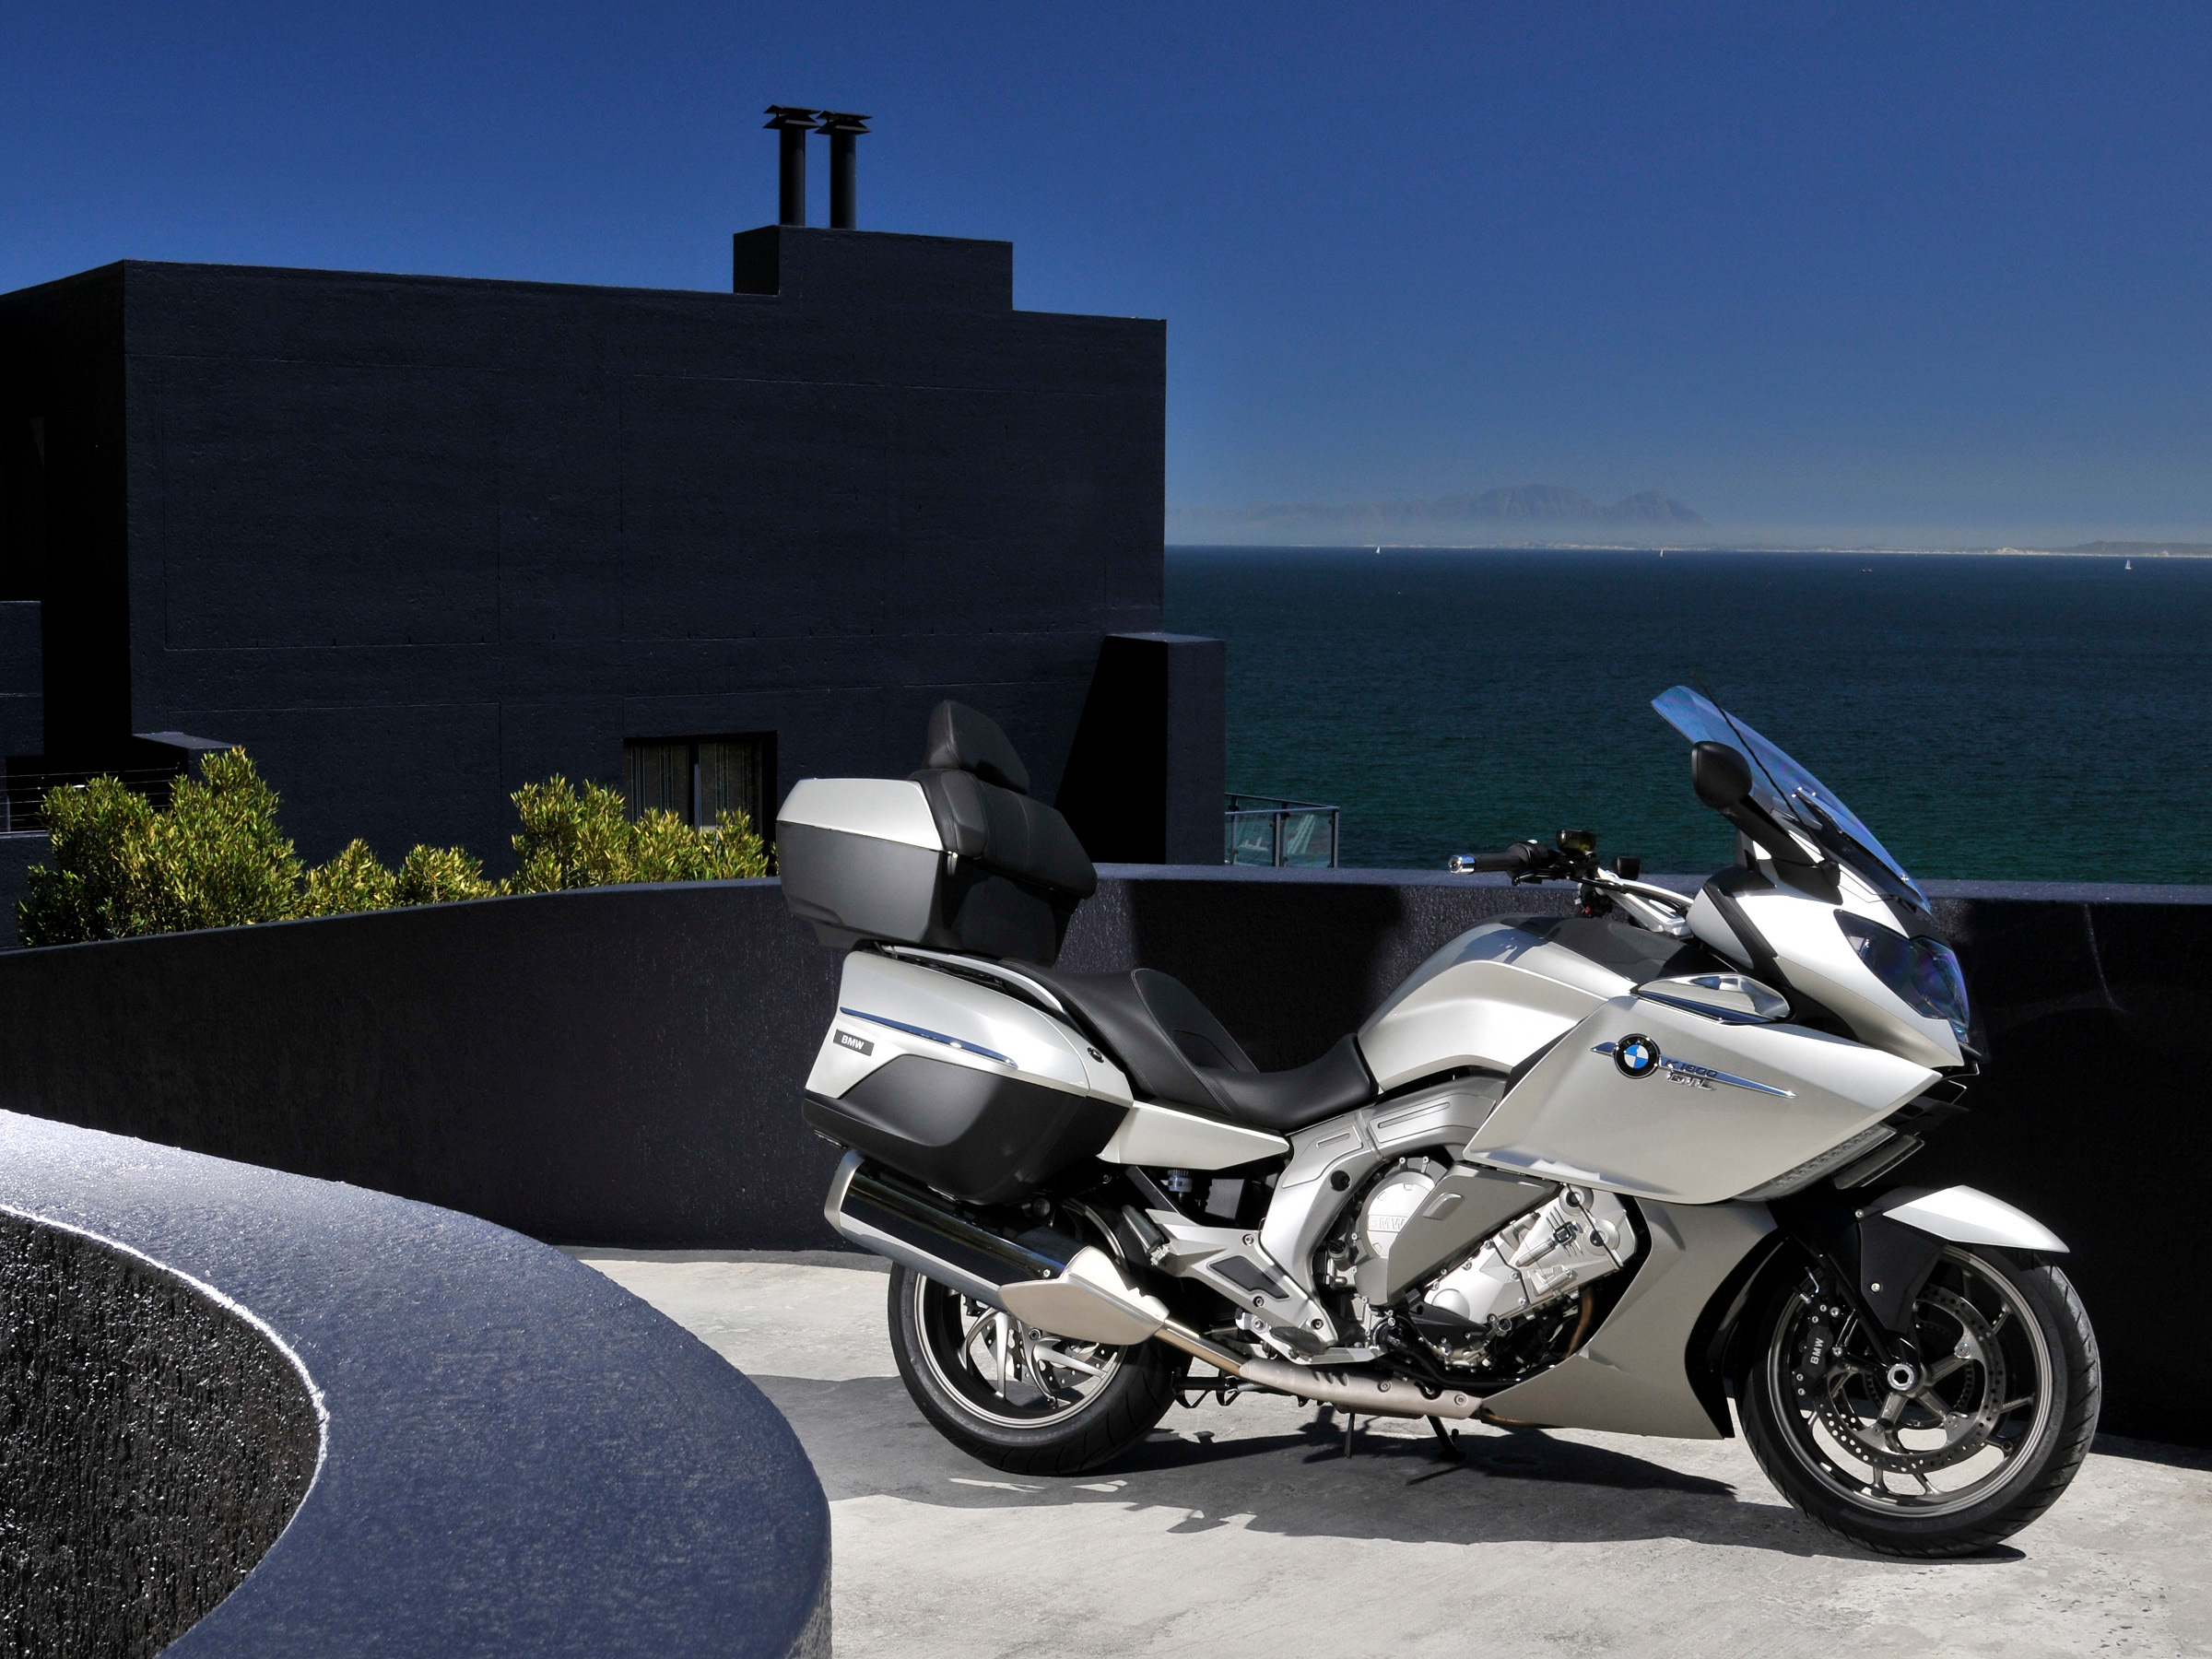 BMW K 1600 GTL, Touring bike, 2011 model, Motorcycling, 2400x1800 HD Desktop